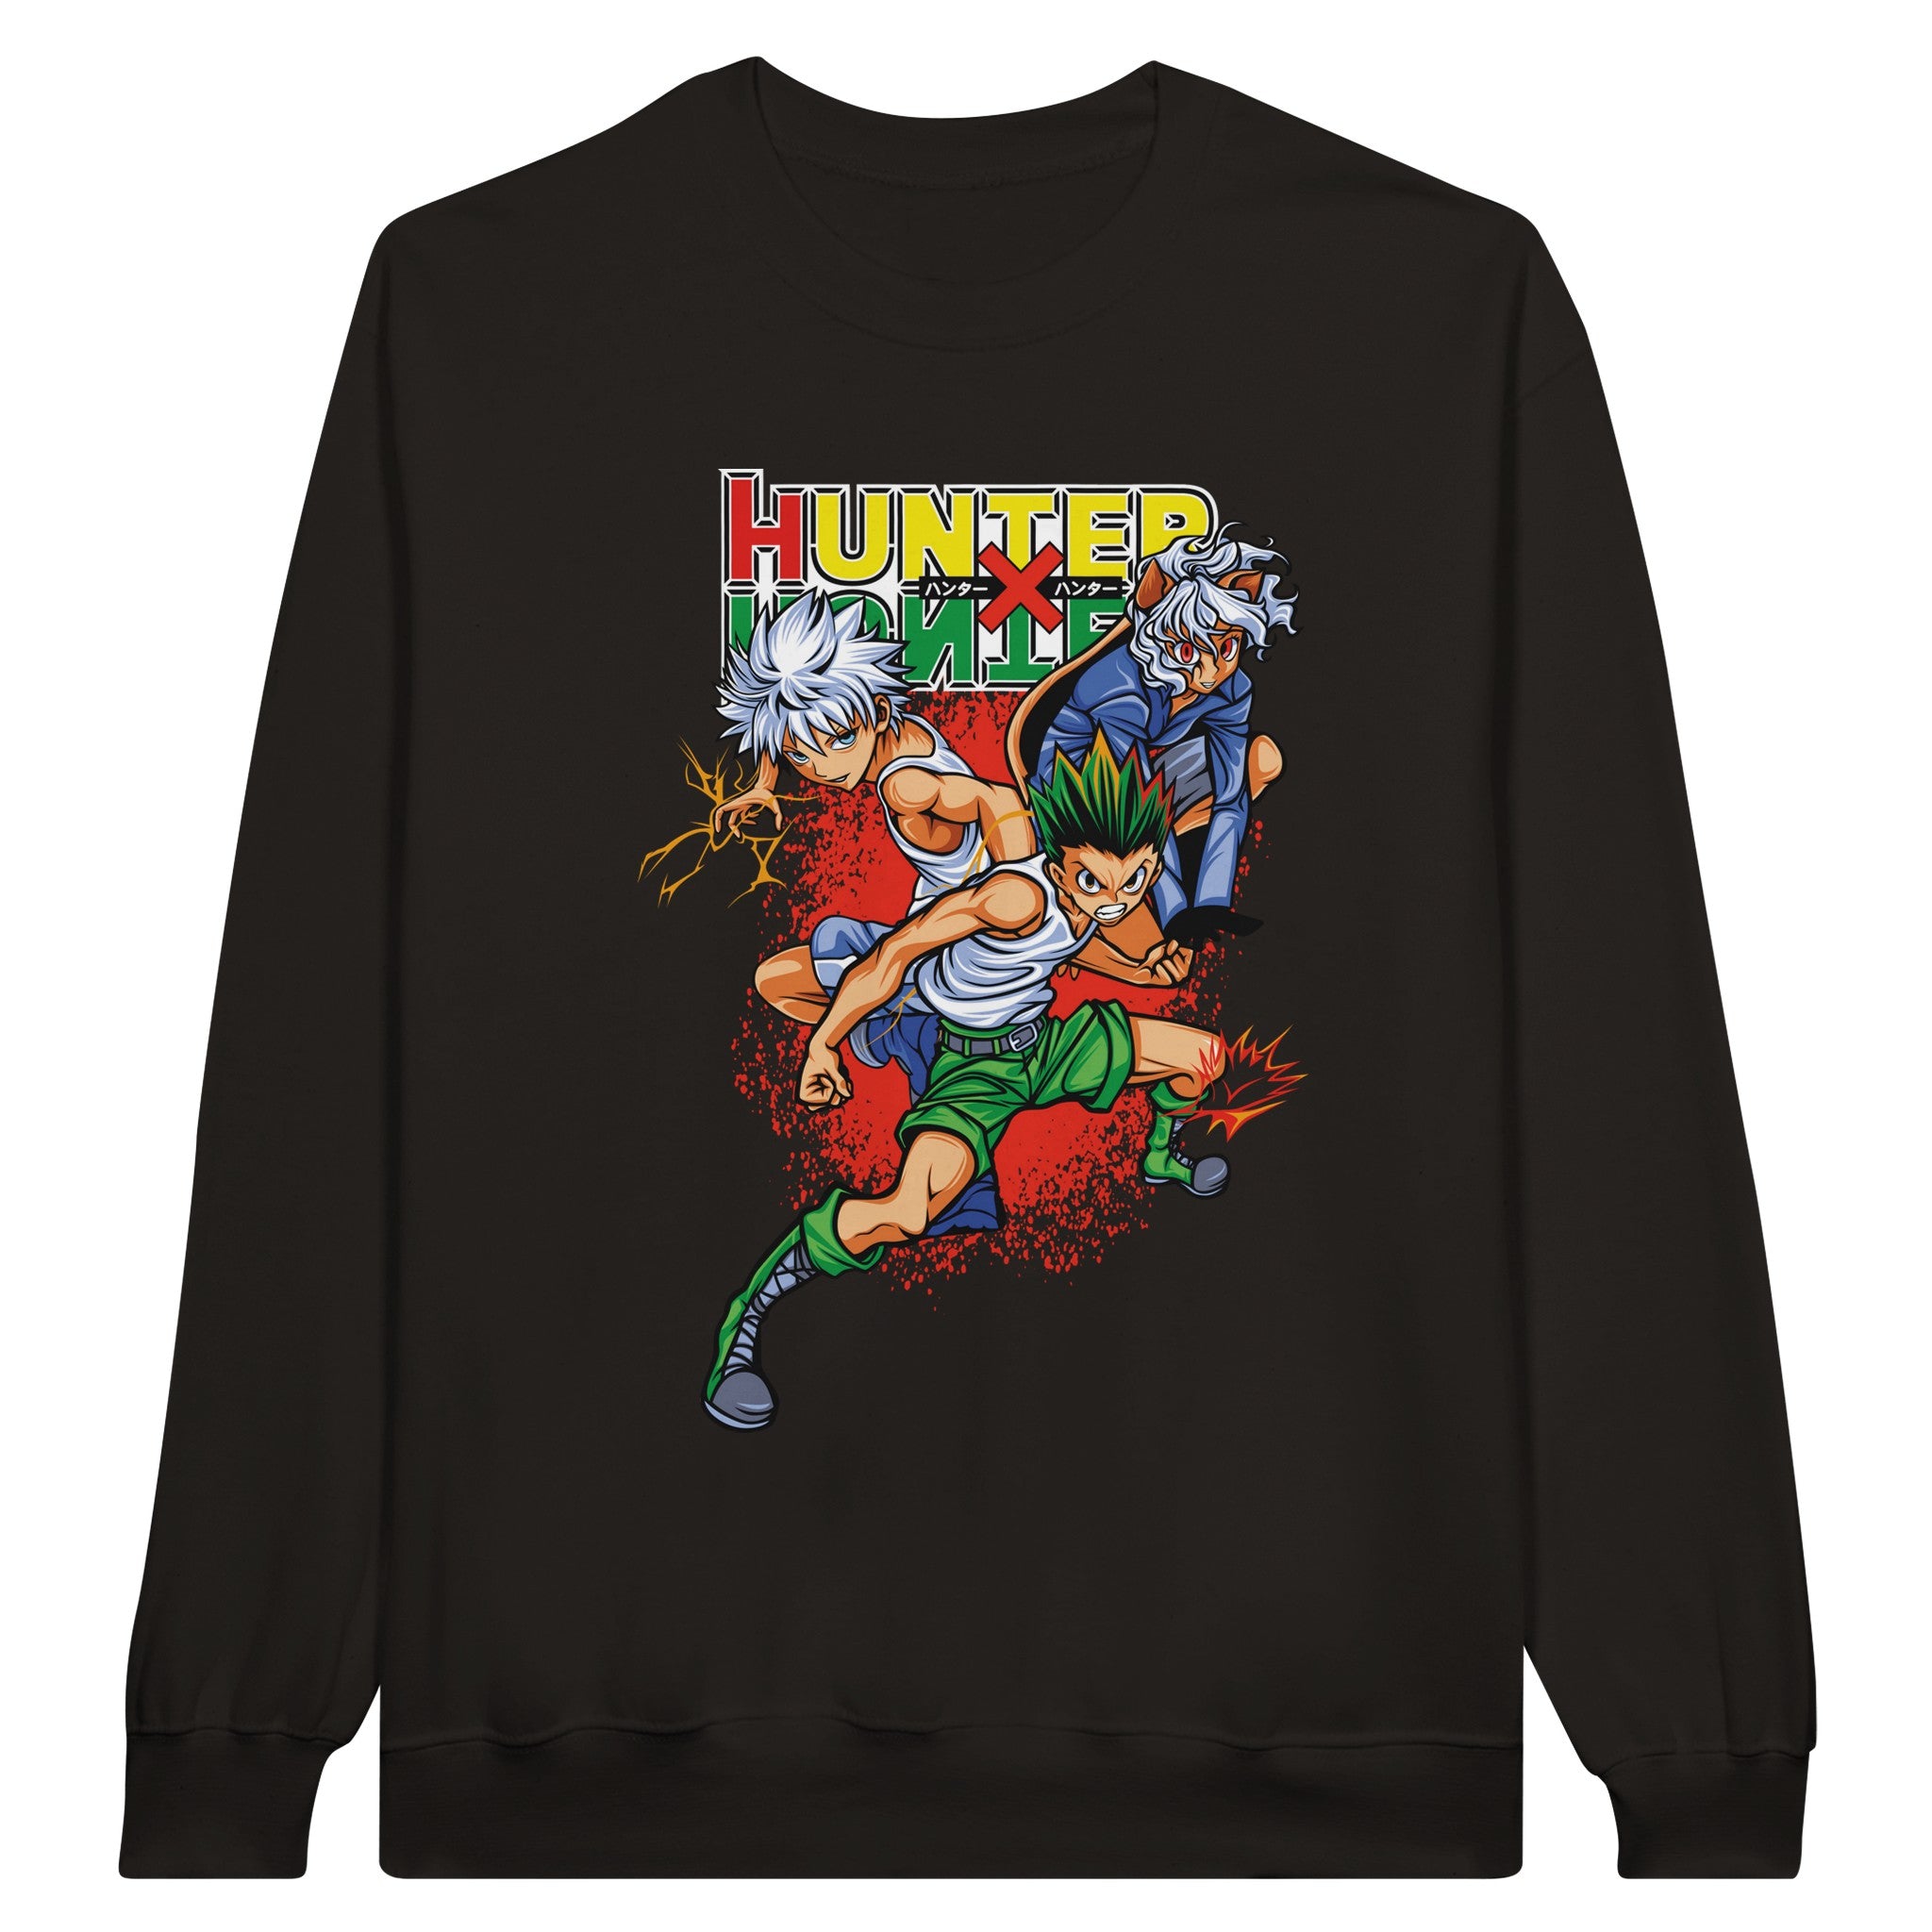 shop and buy hunter x hunter anime clothing gon and killua sweatshirt/longsleeve/jumper